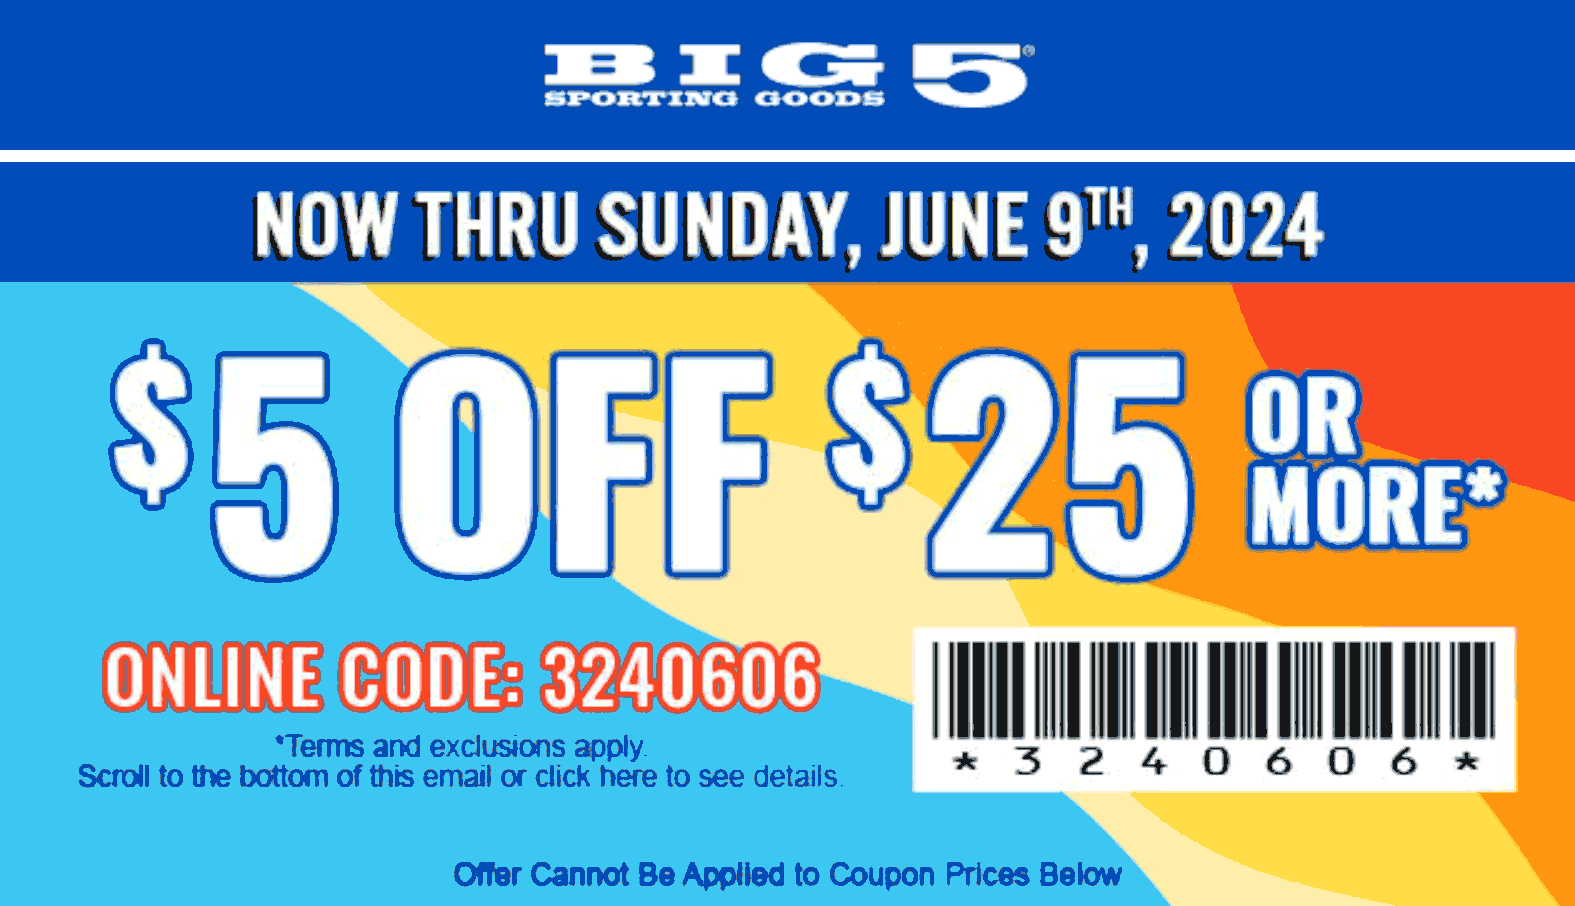 Big 5 stores Coupon  $5 off $25 at Big 5 sporting goods, or online via promo code 3240606 #big5 